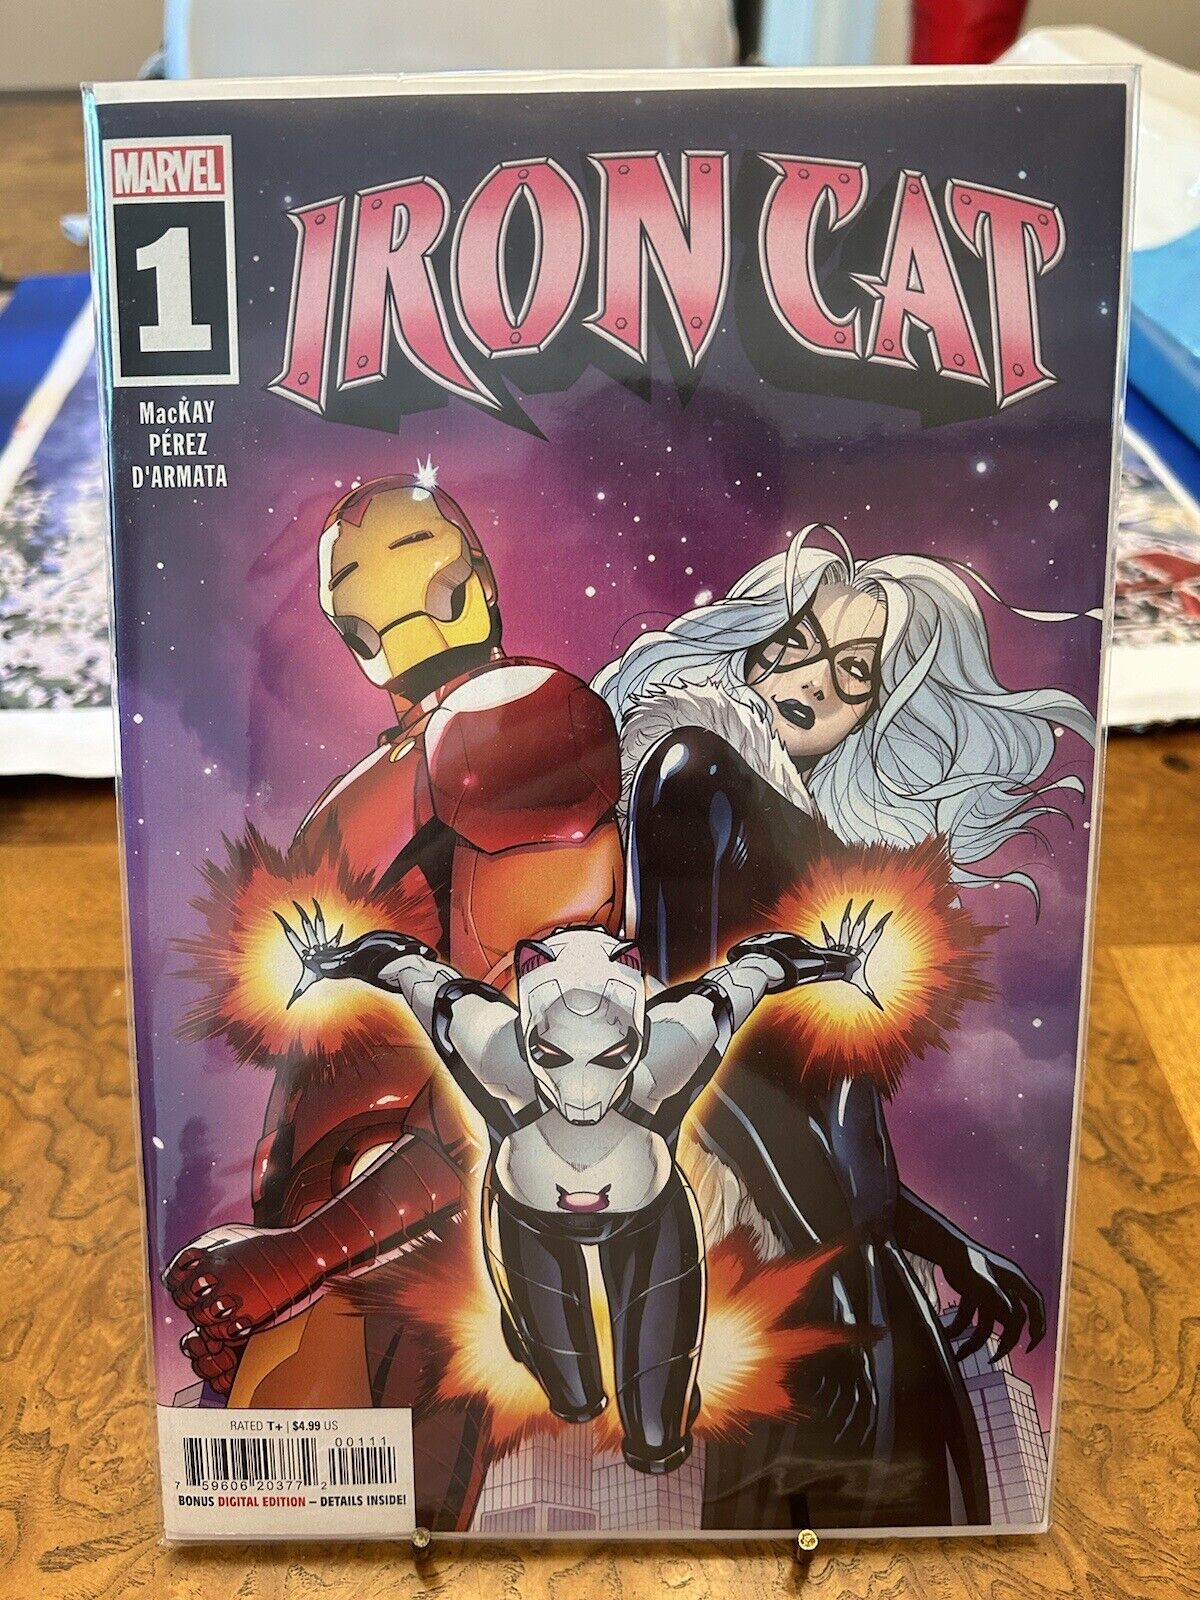 Iron Cat #1 (Marvel Comics August 2022)